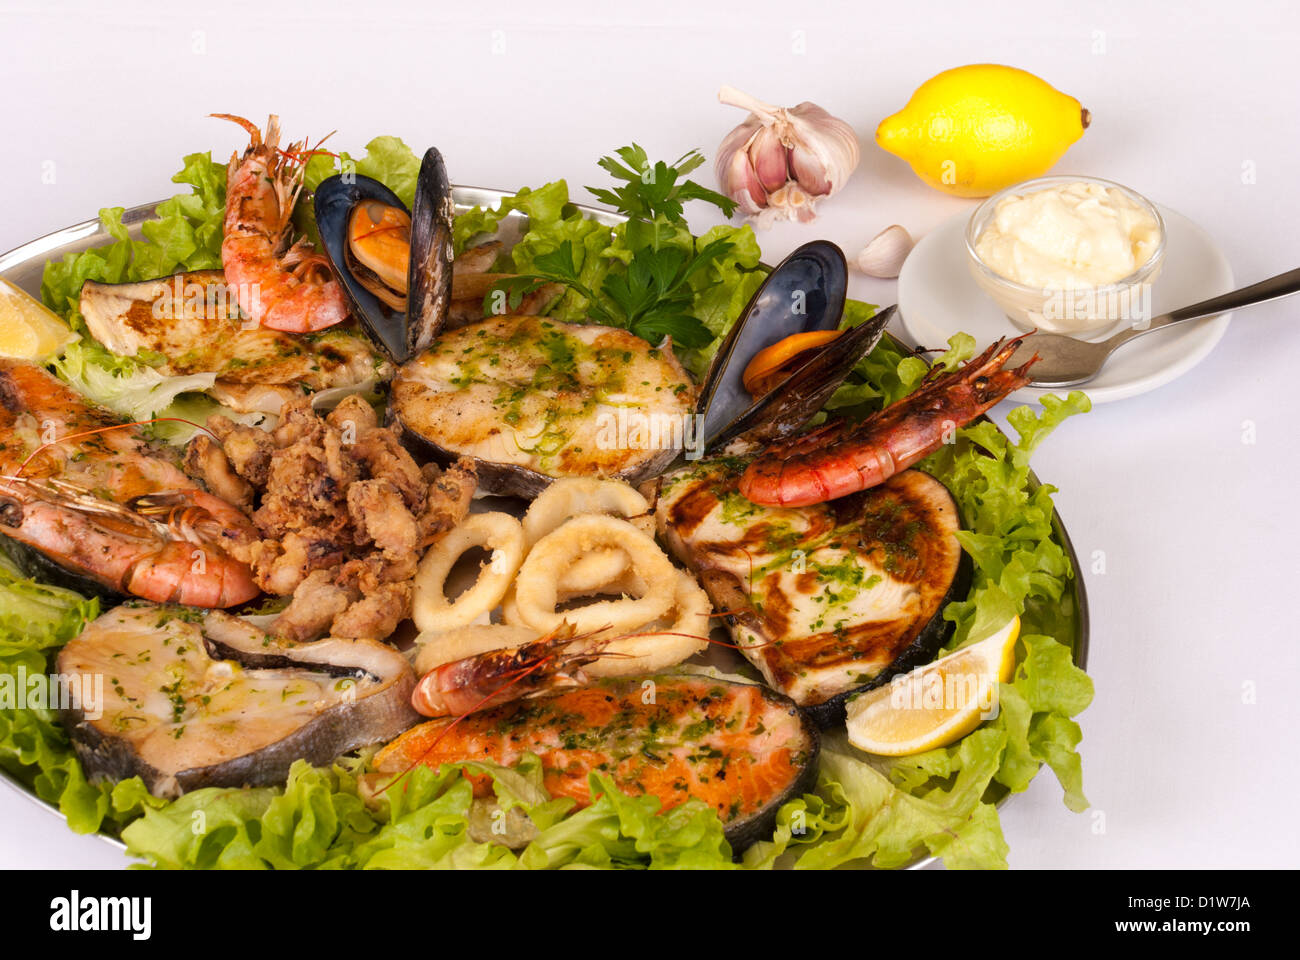 https://c8.alamy.com/comp/D1W7JA/sapanish-parrillada-assorted-fish-and-seafood-D1W7JA.jpg